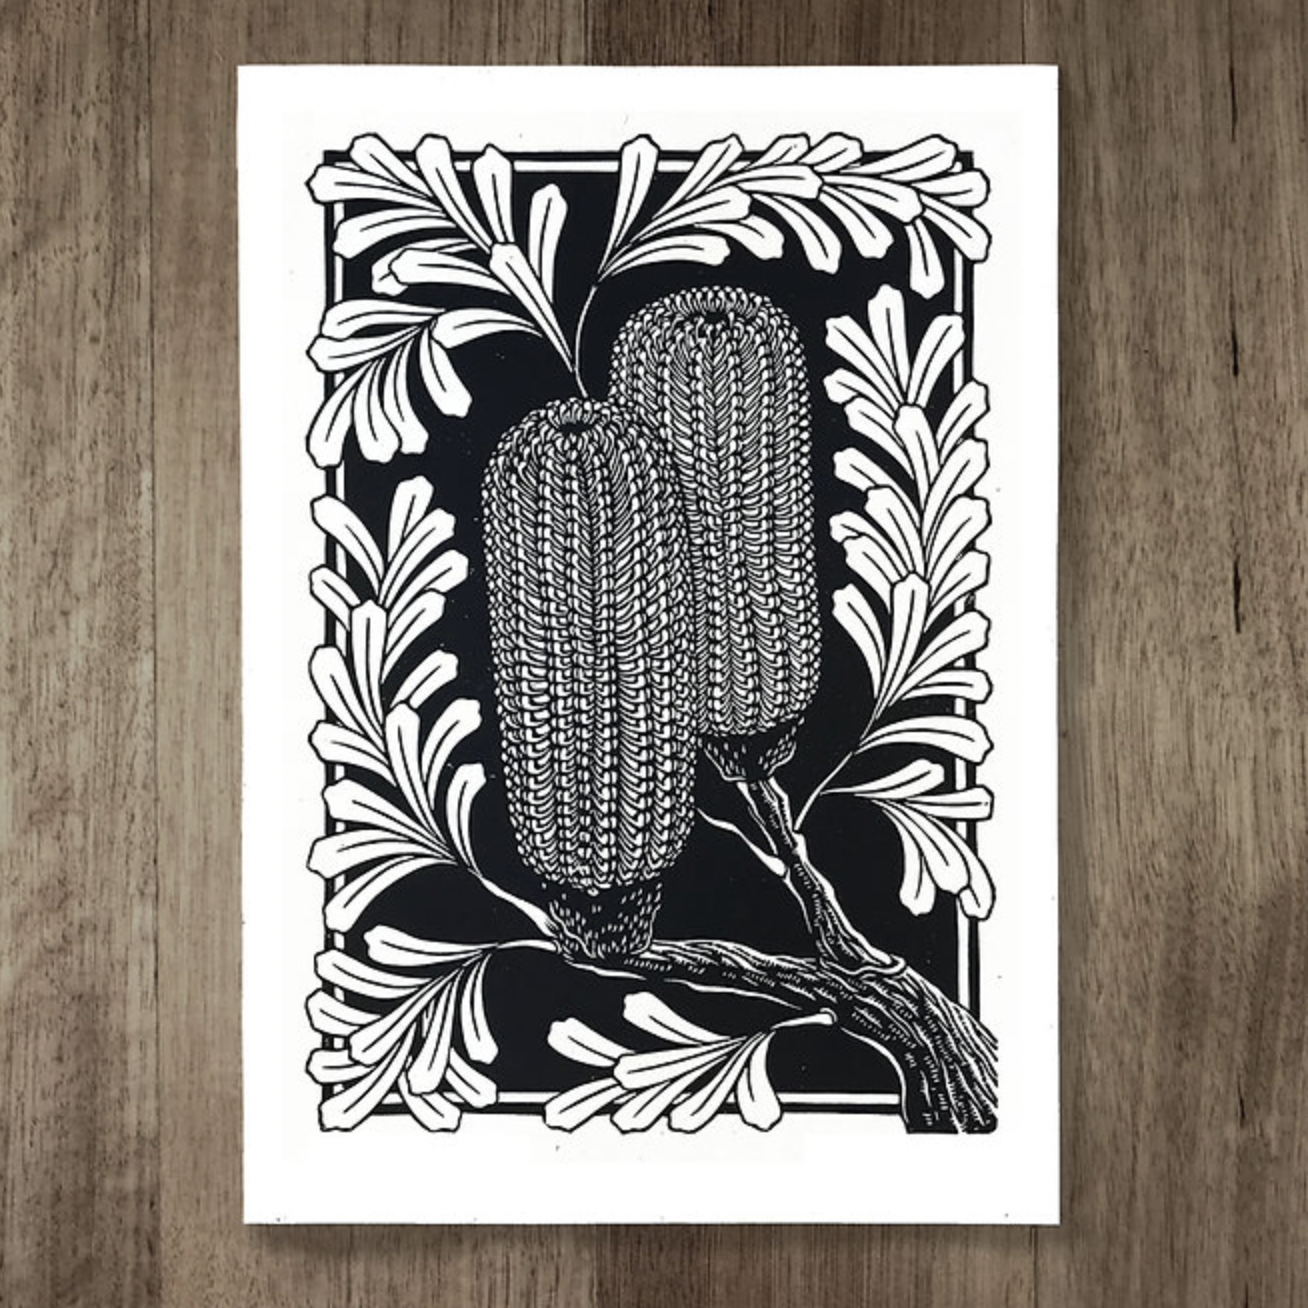 Catherine Arsaut - Art Print A4 - Banksia Marginata - Black on White